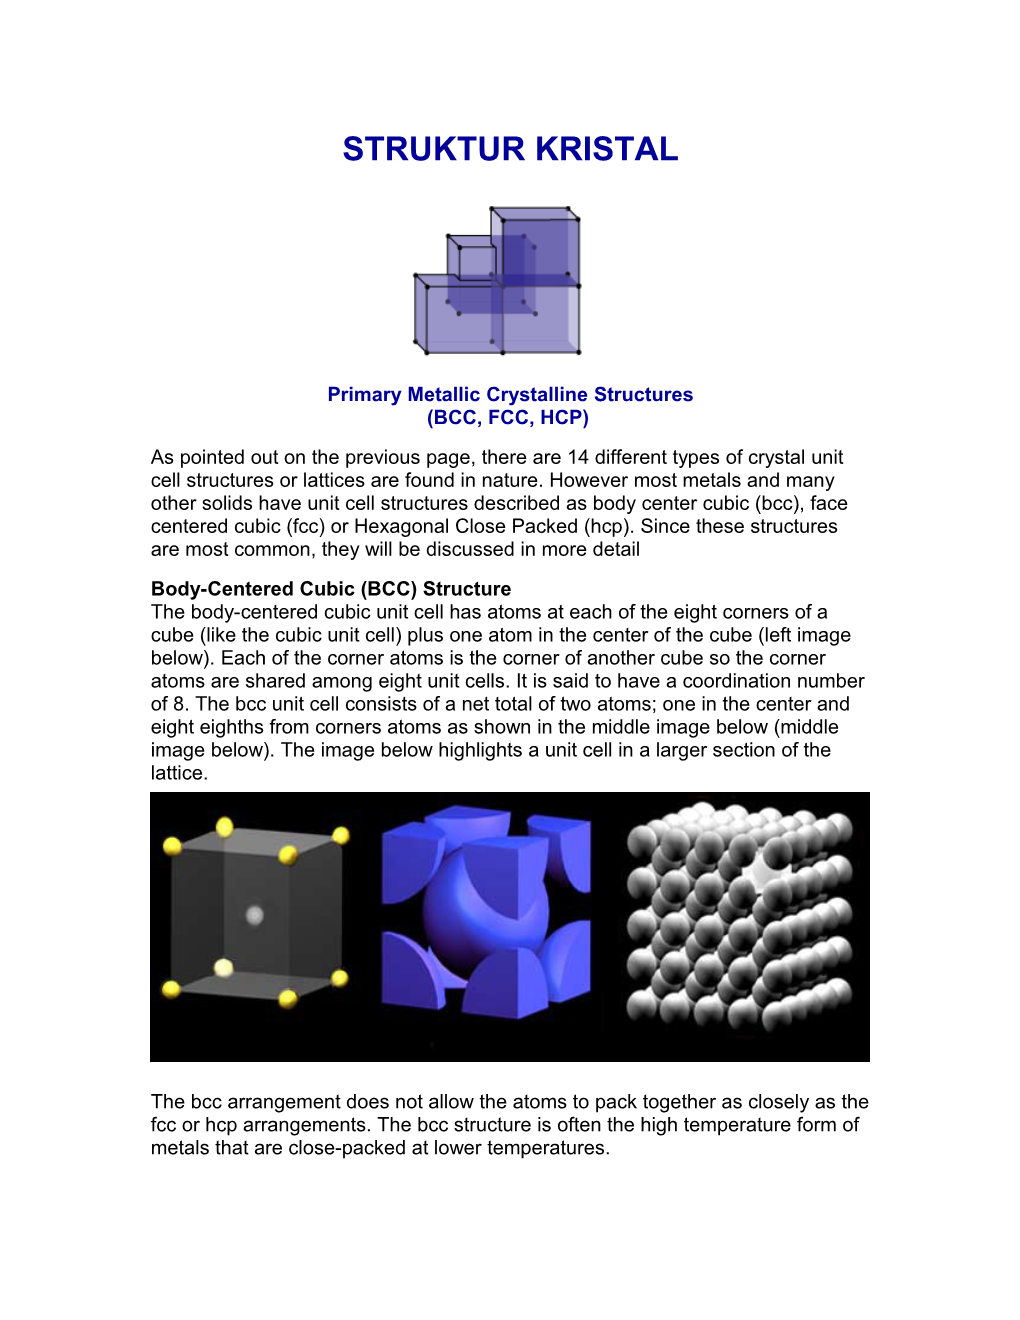 Primary Metallic Crystalline Structures